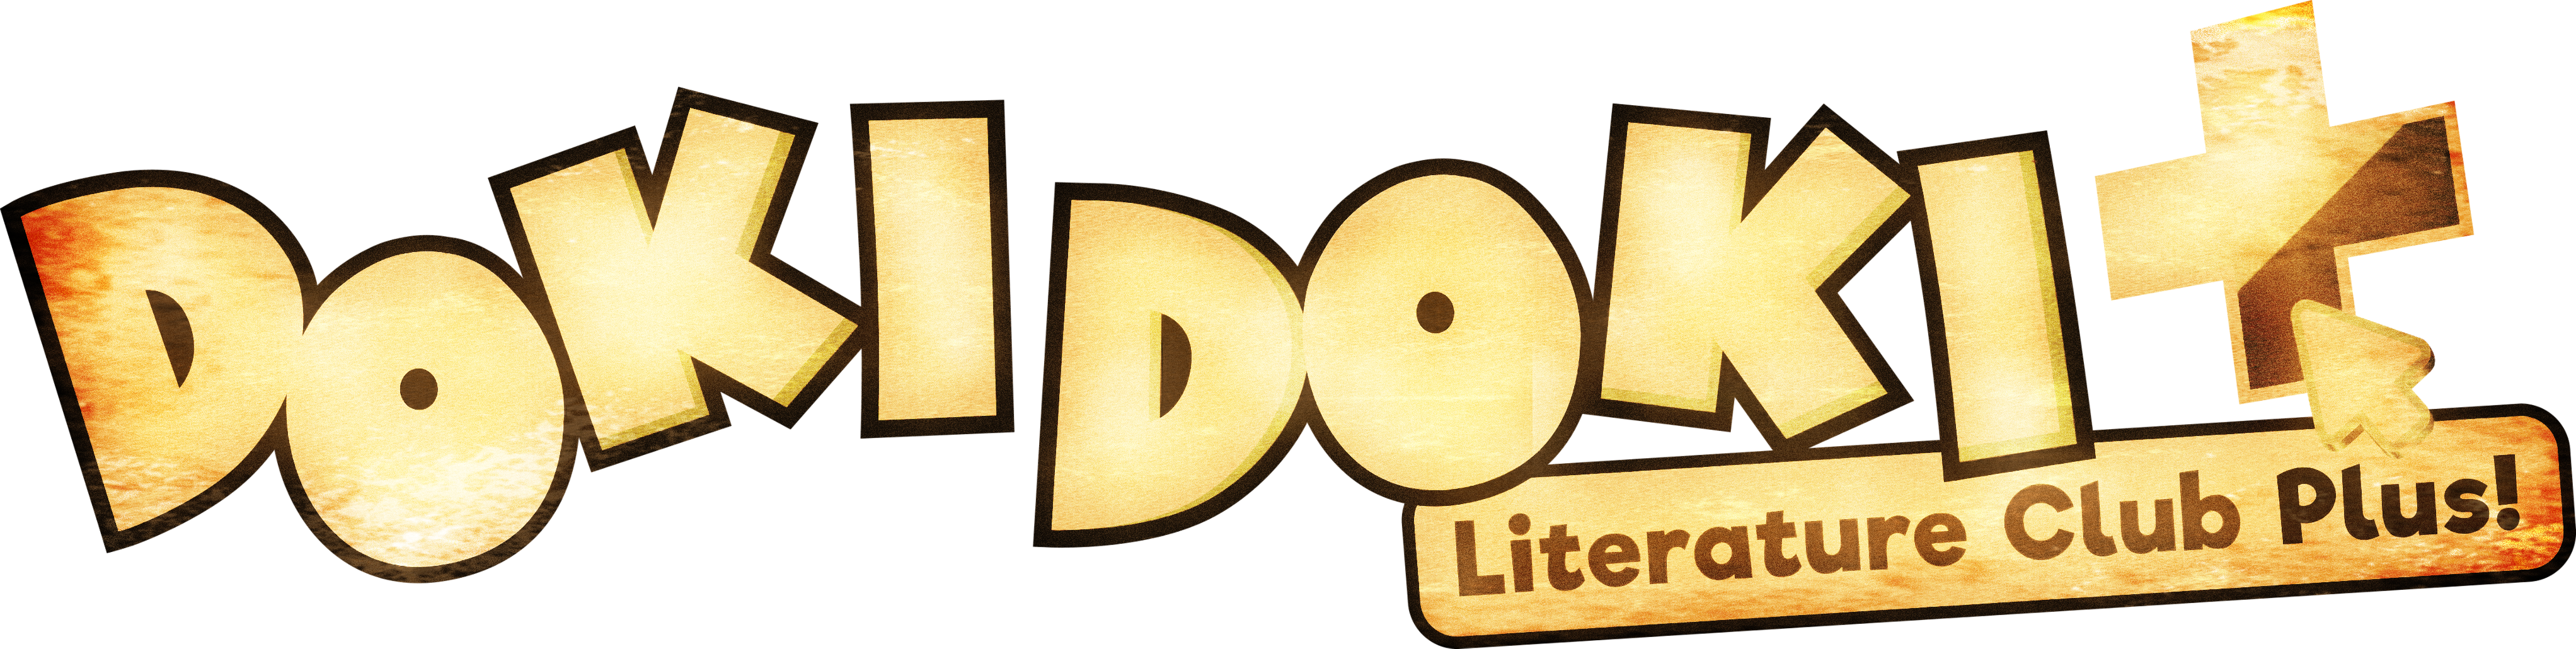 Doki Doki Literature Club Plus! - SteamGridDB